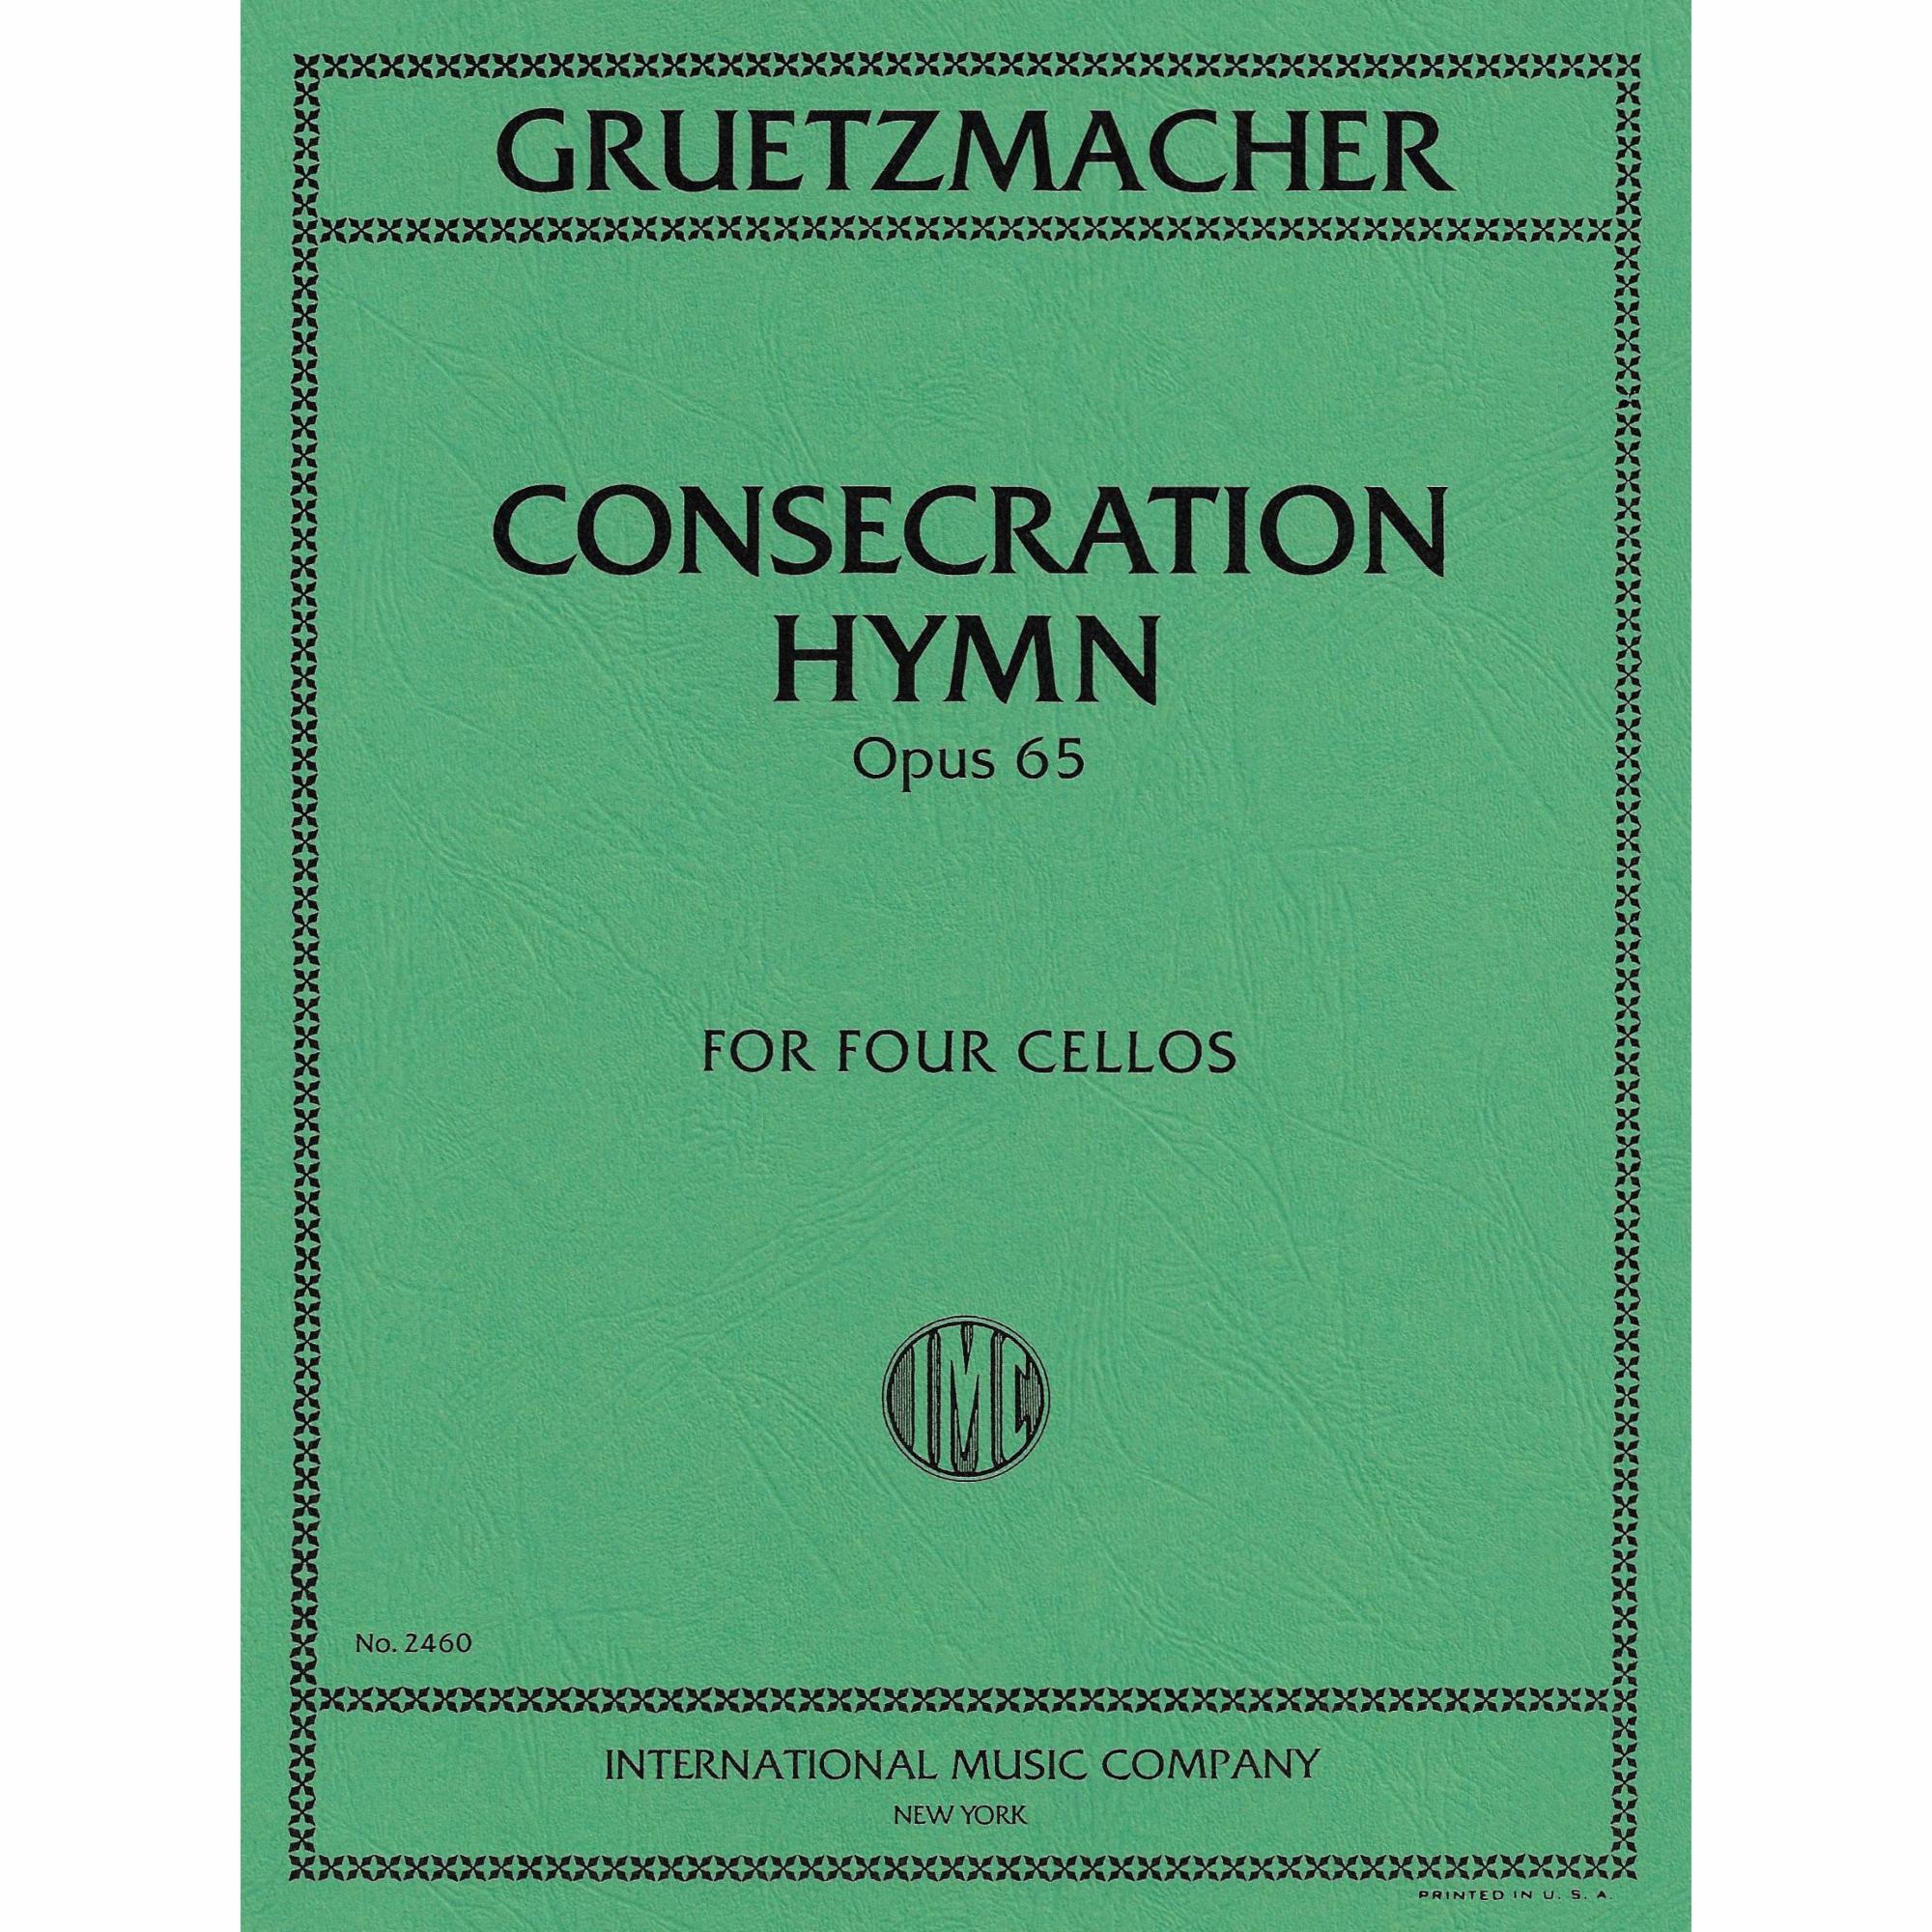 Gruetzmacher -- Consecration Hymn, Op. 65 for Four Cellos